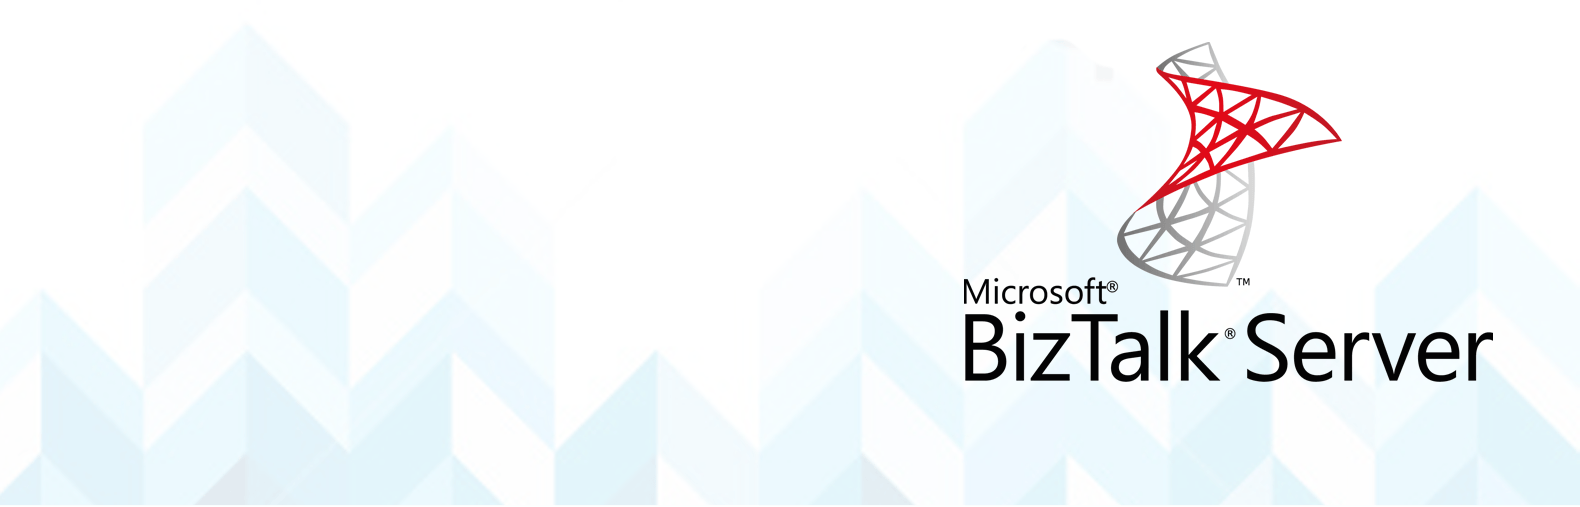 BizTalk Logo - BizTalk - Offerings